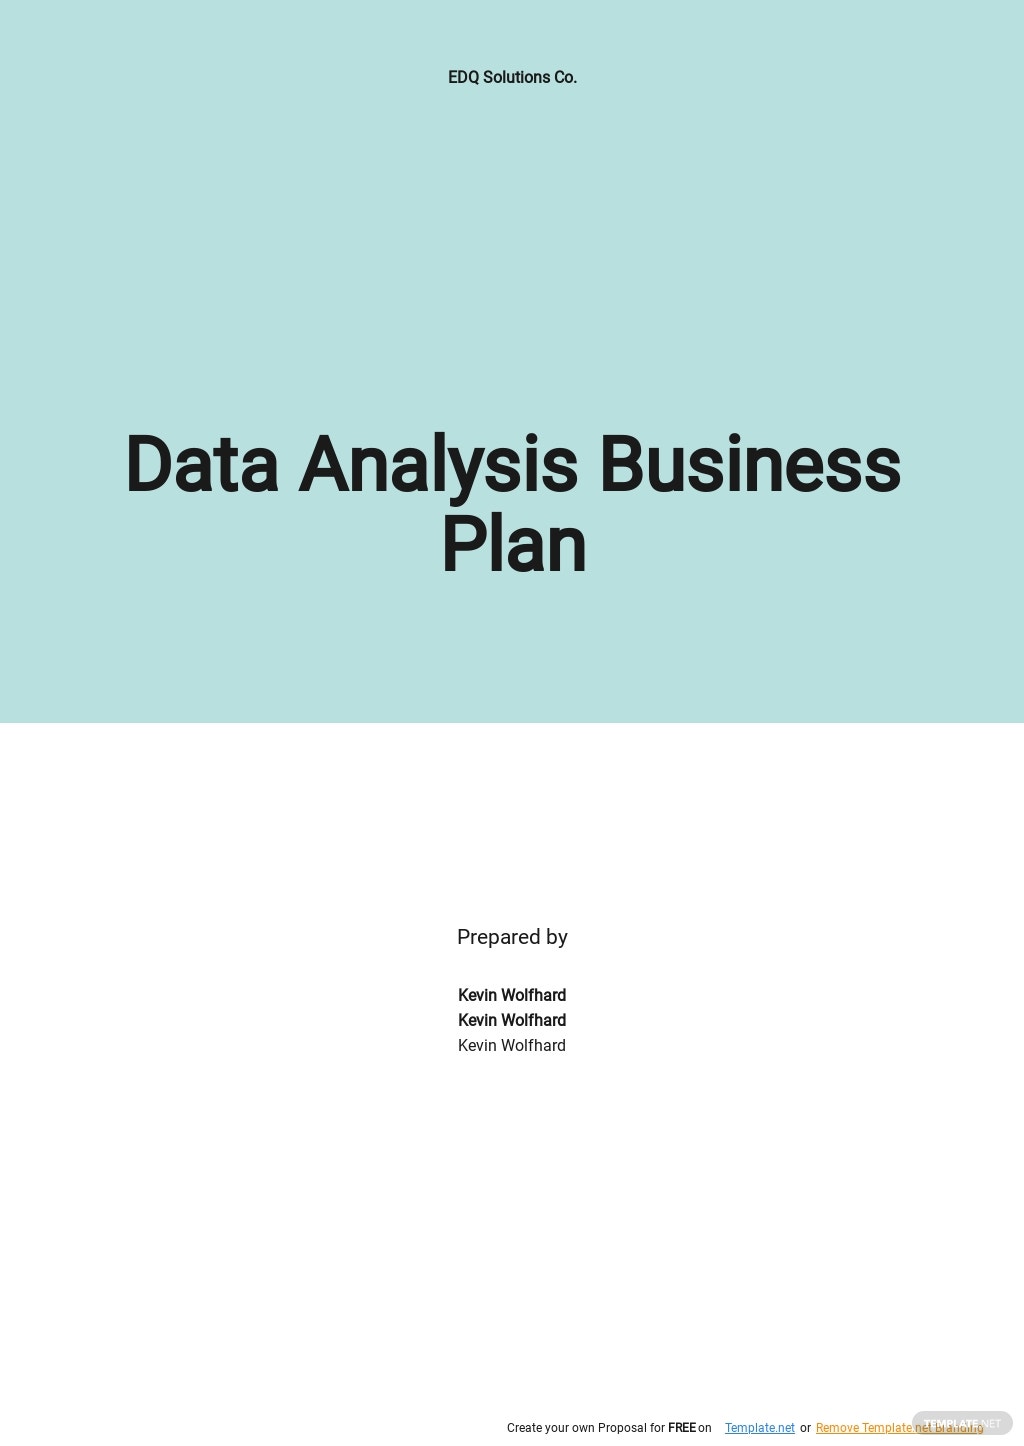 global analysis business plan sample